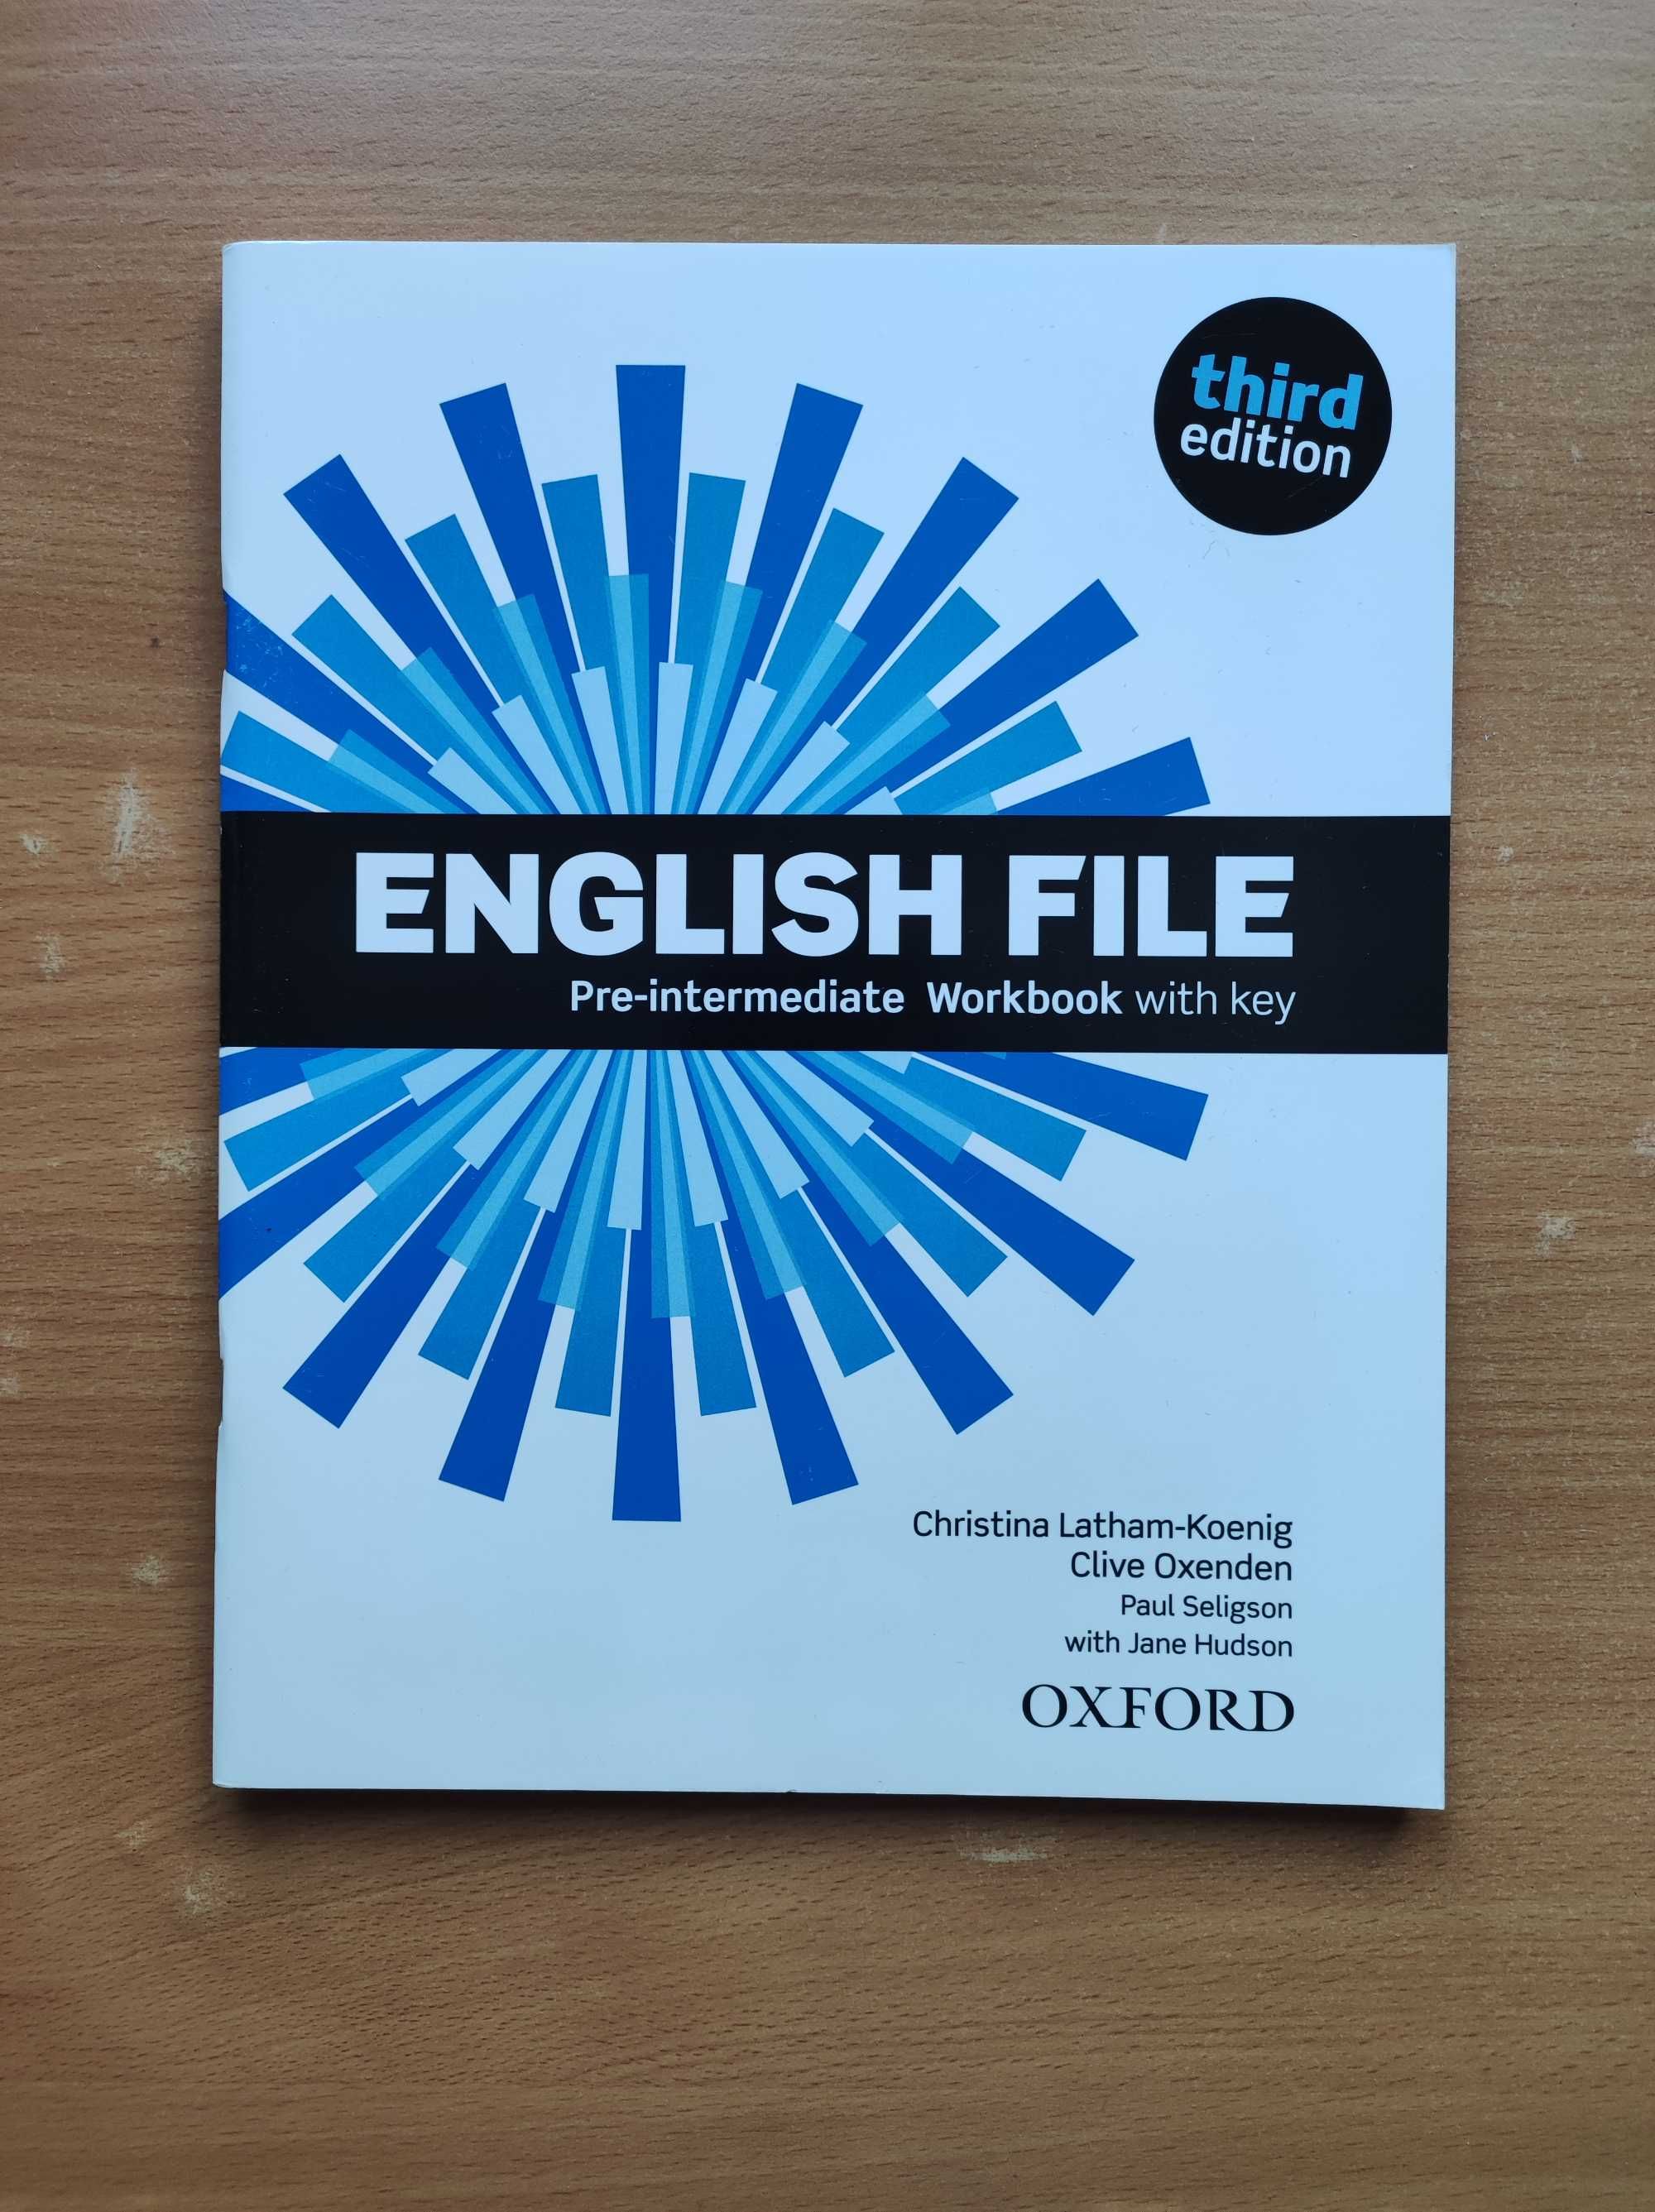 English File Third Edition Pre-Intermediate Workbook with key